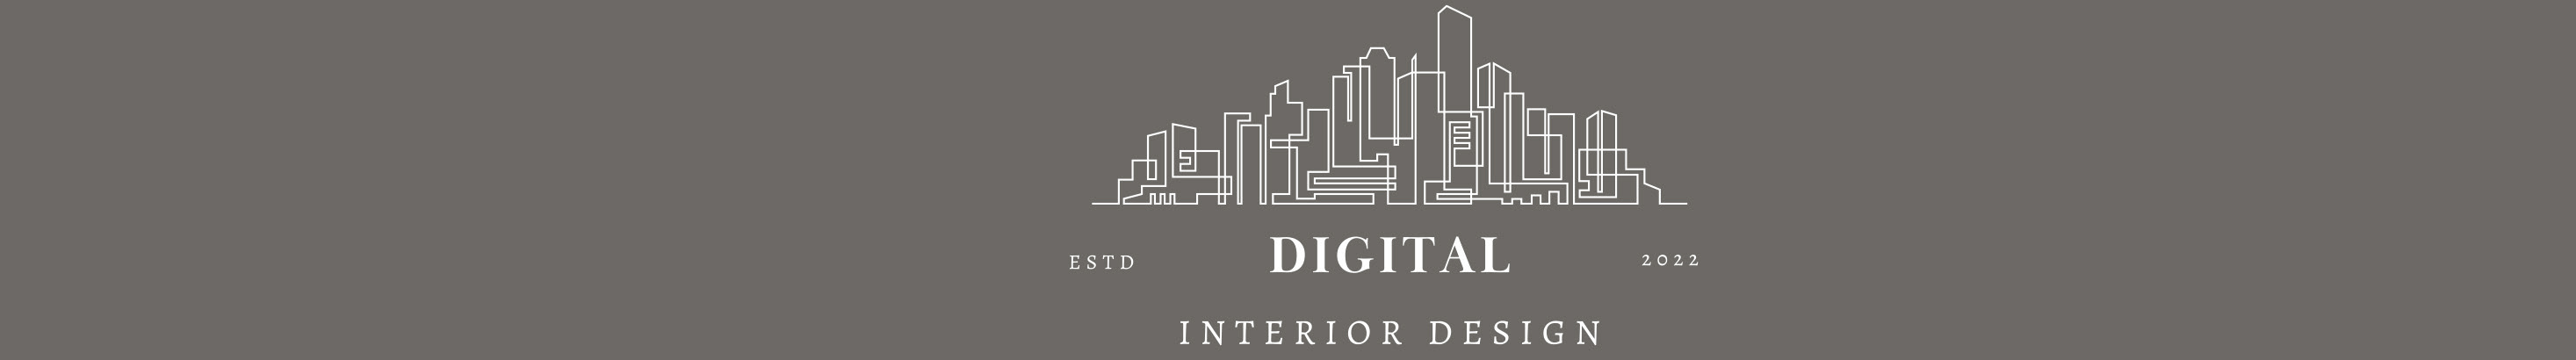 Digital Interior Design's profile banner